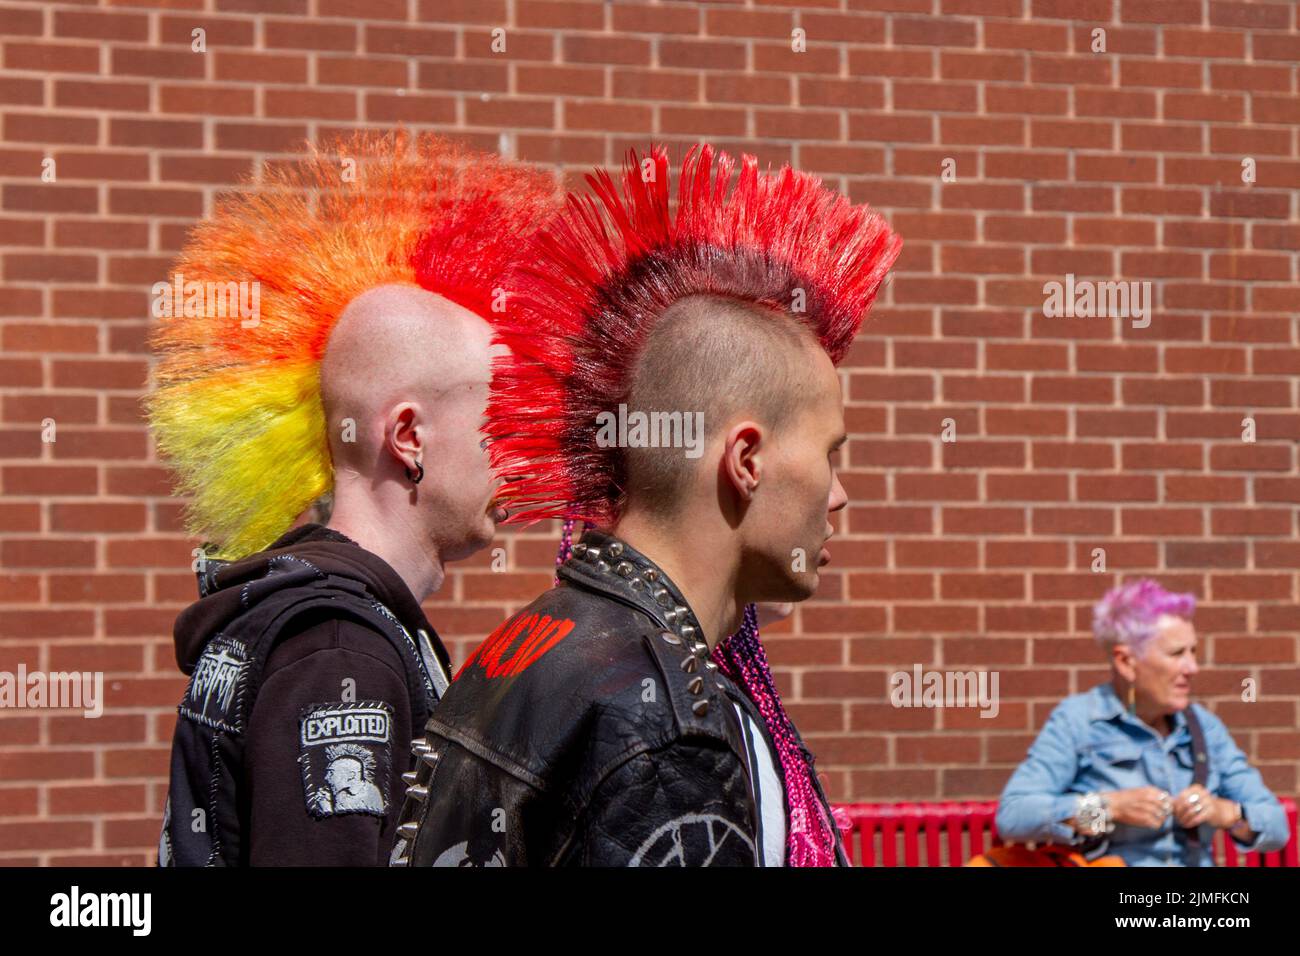 Blackpool Rebellion Festival Punk moda la ropa, peinados